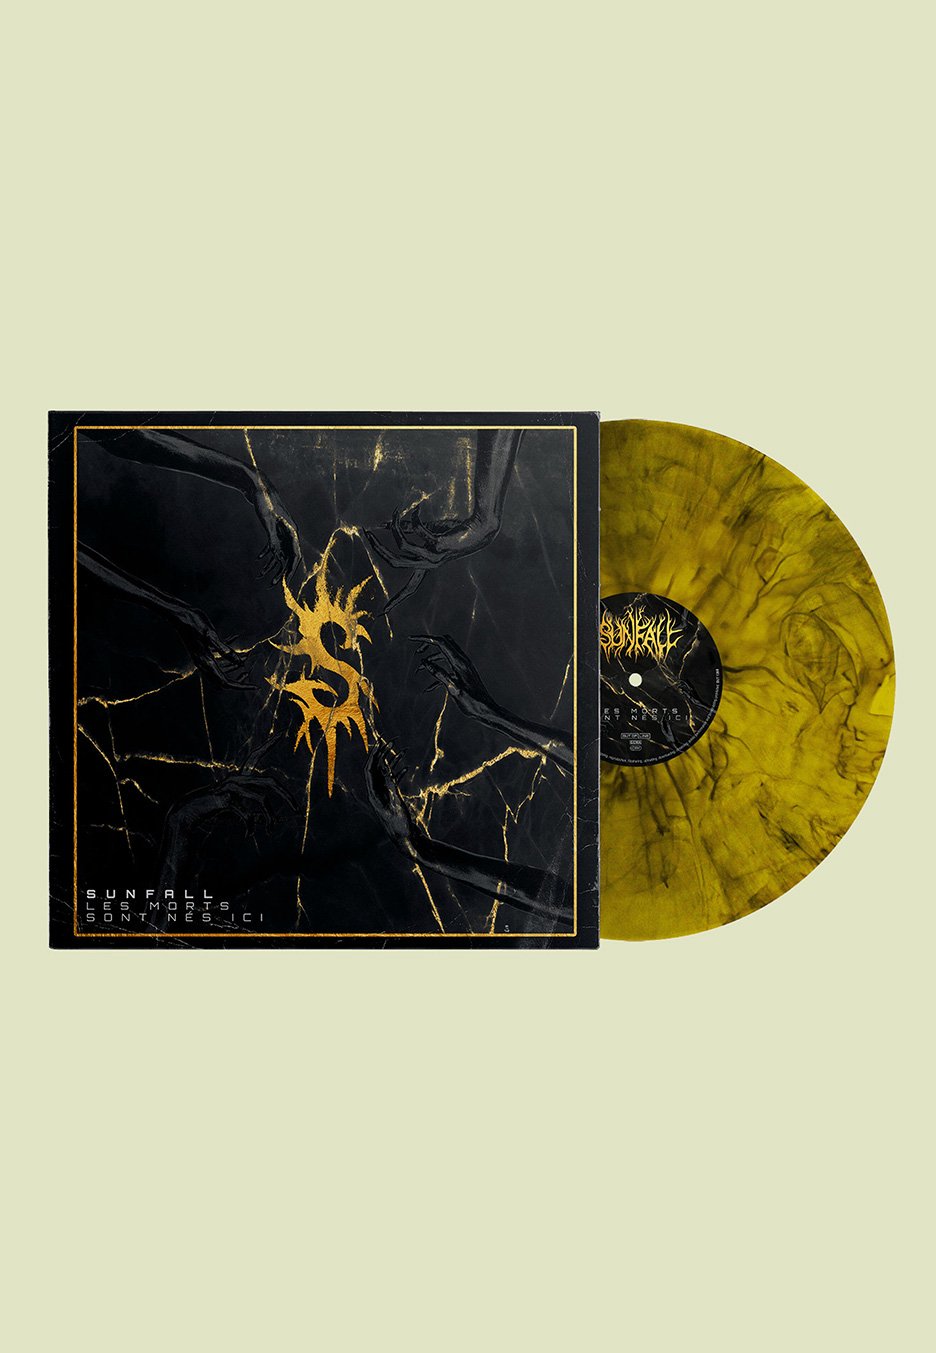 Sunfall - Les Morts Sont Nés Ici Ltd. Yellow/Black - Colored Vinyl